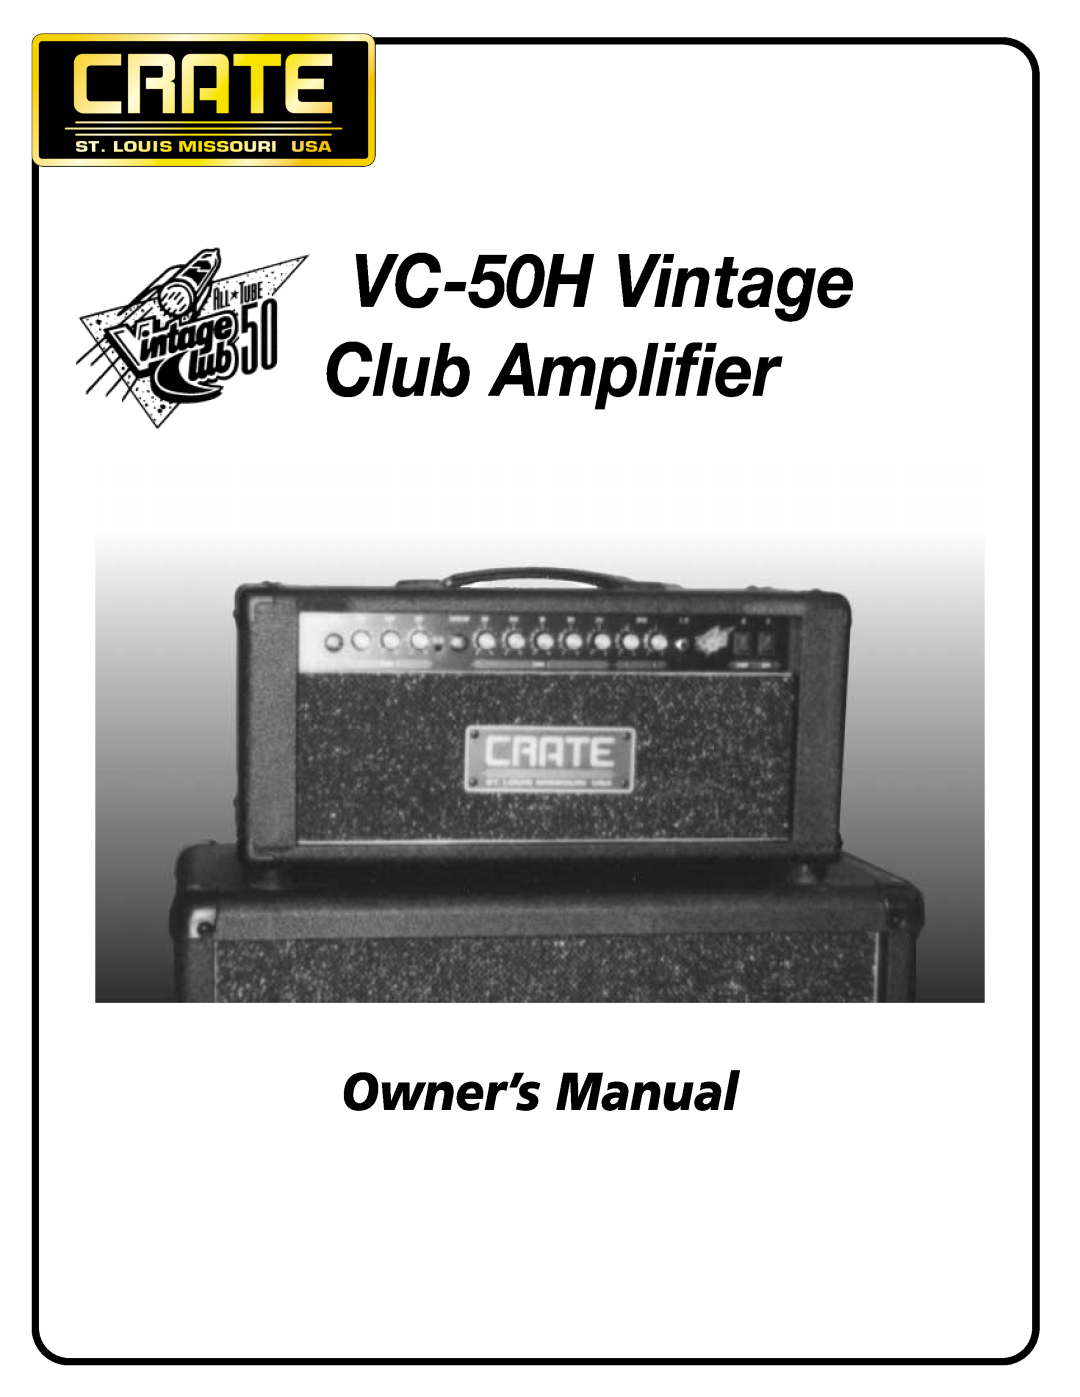 Crate Amplifiers owner manual VC-50HVintage Club Amplifier 